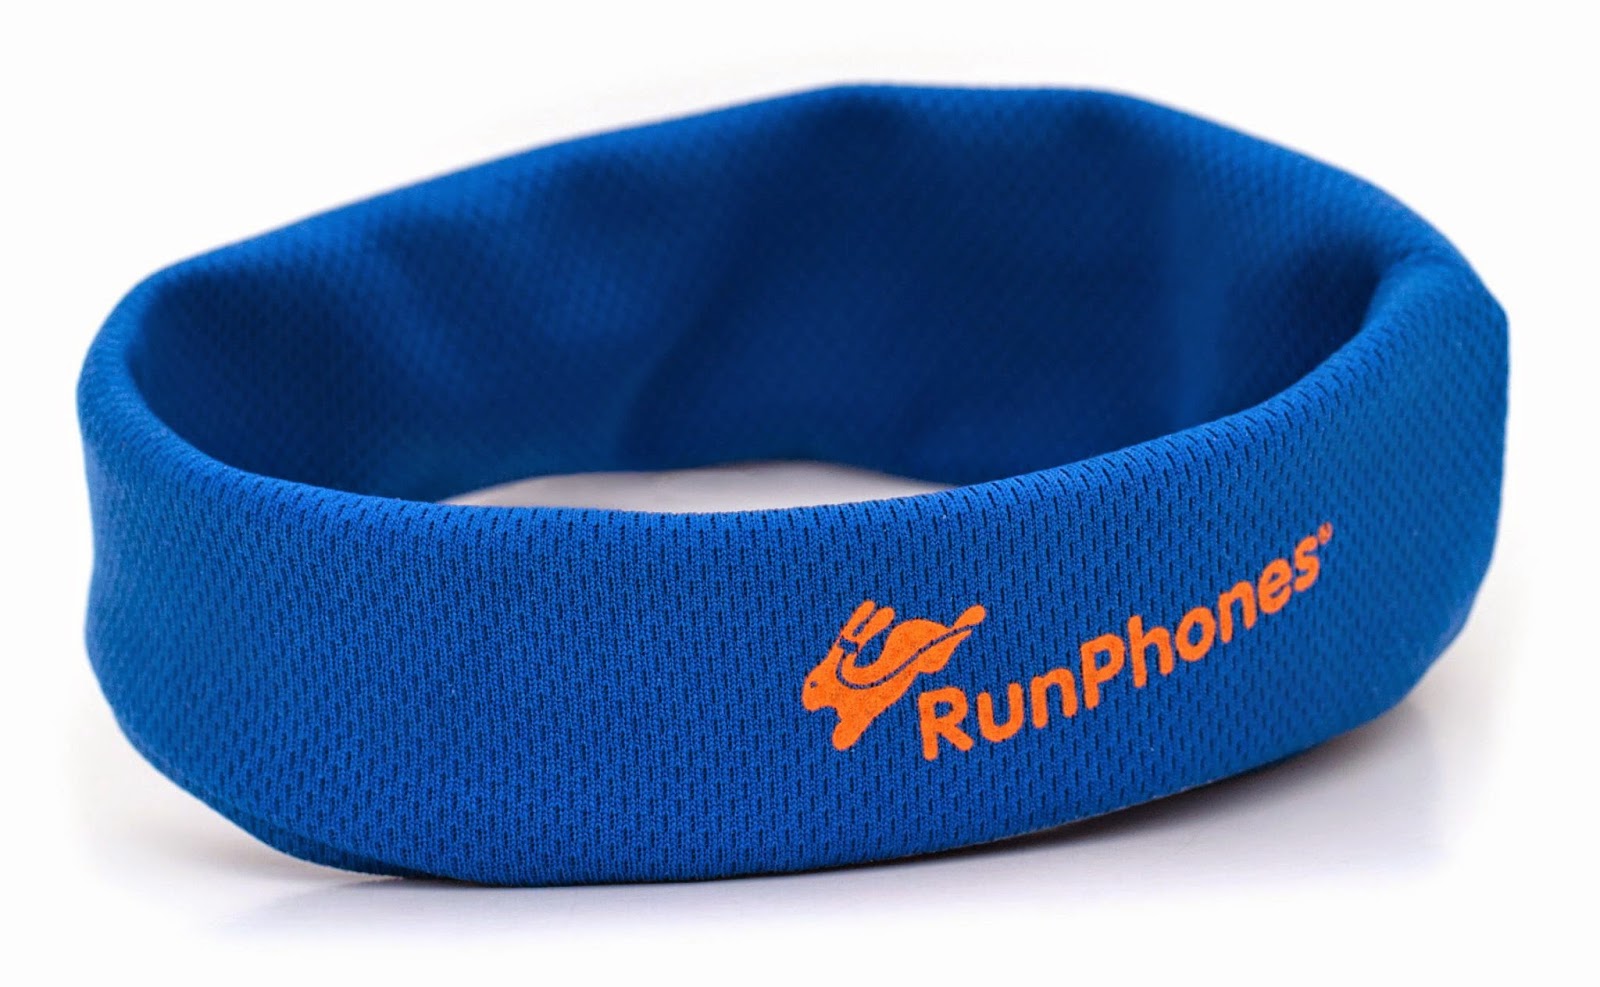 RunPhones Wireless Bluetooth Headphones from AcousticSheep